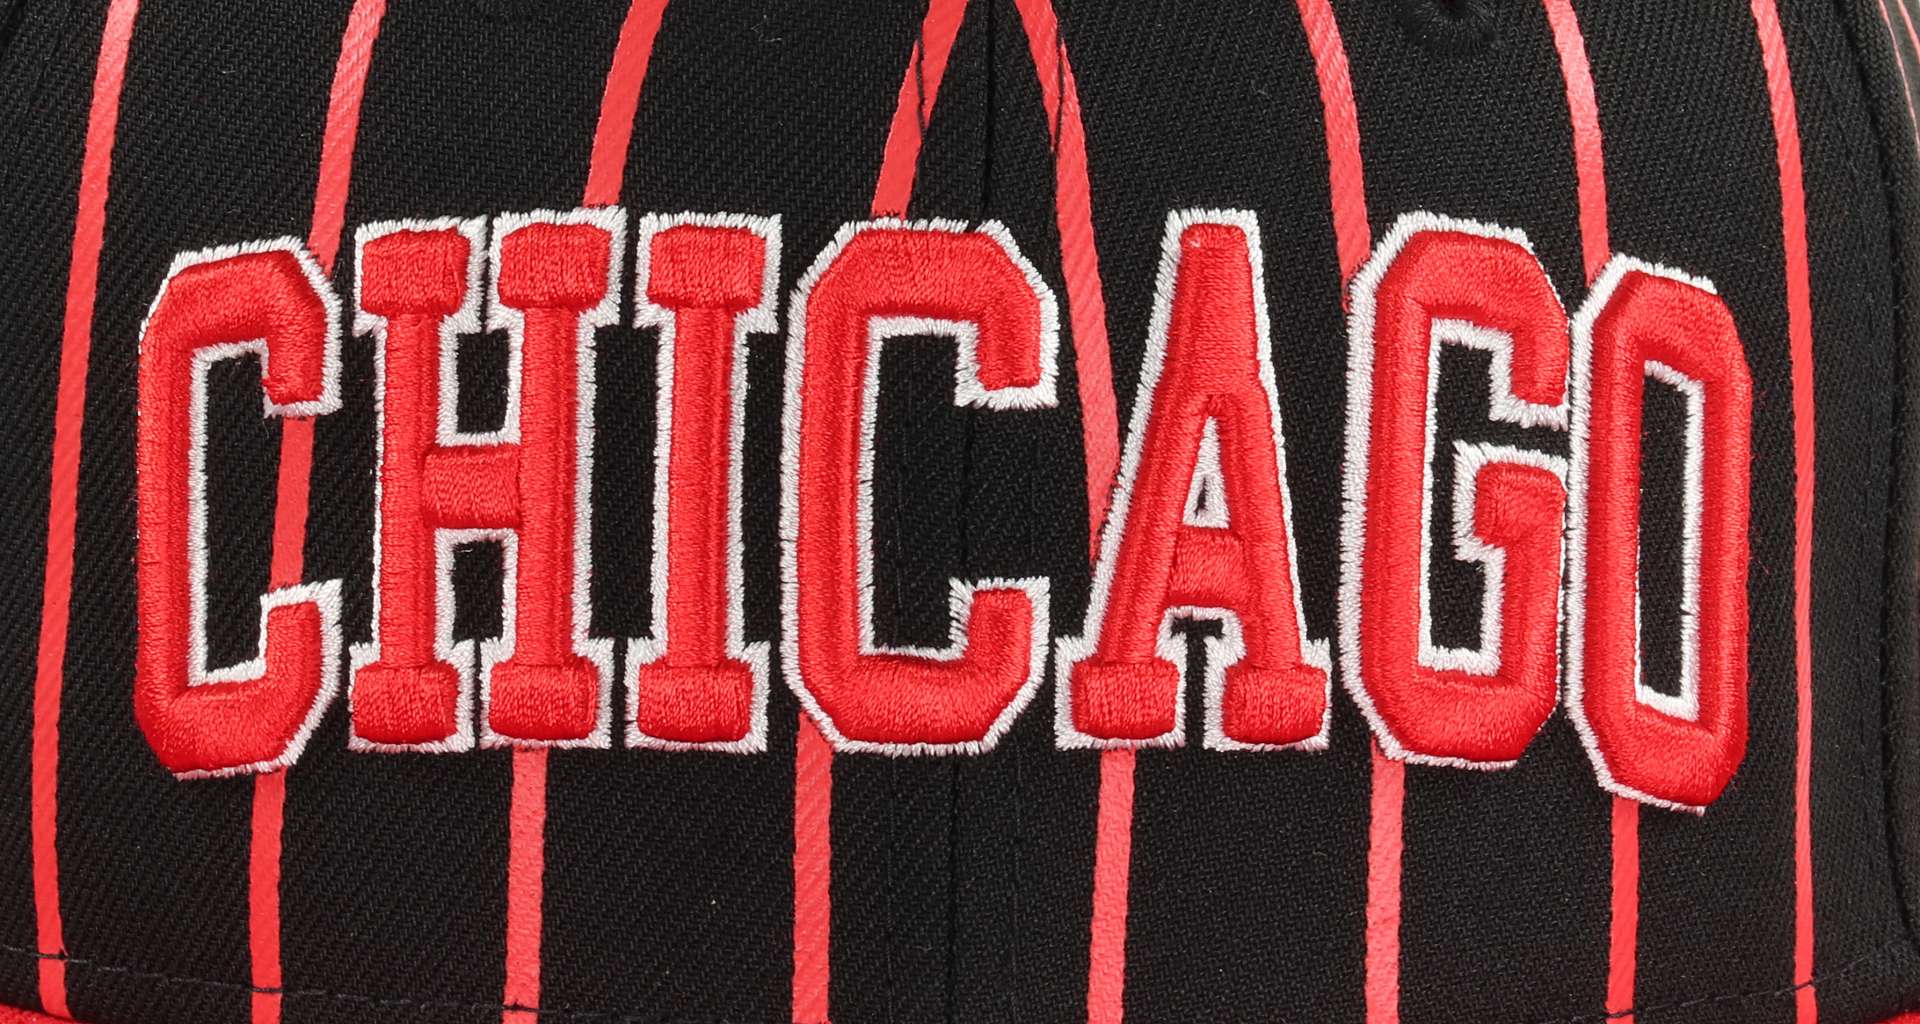 Chicago Bulls City Arch Black 9Fifty Snapback Cap New Era